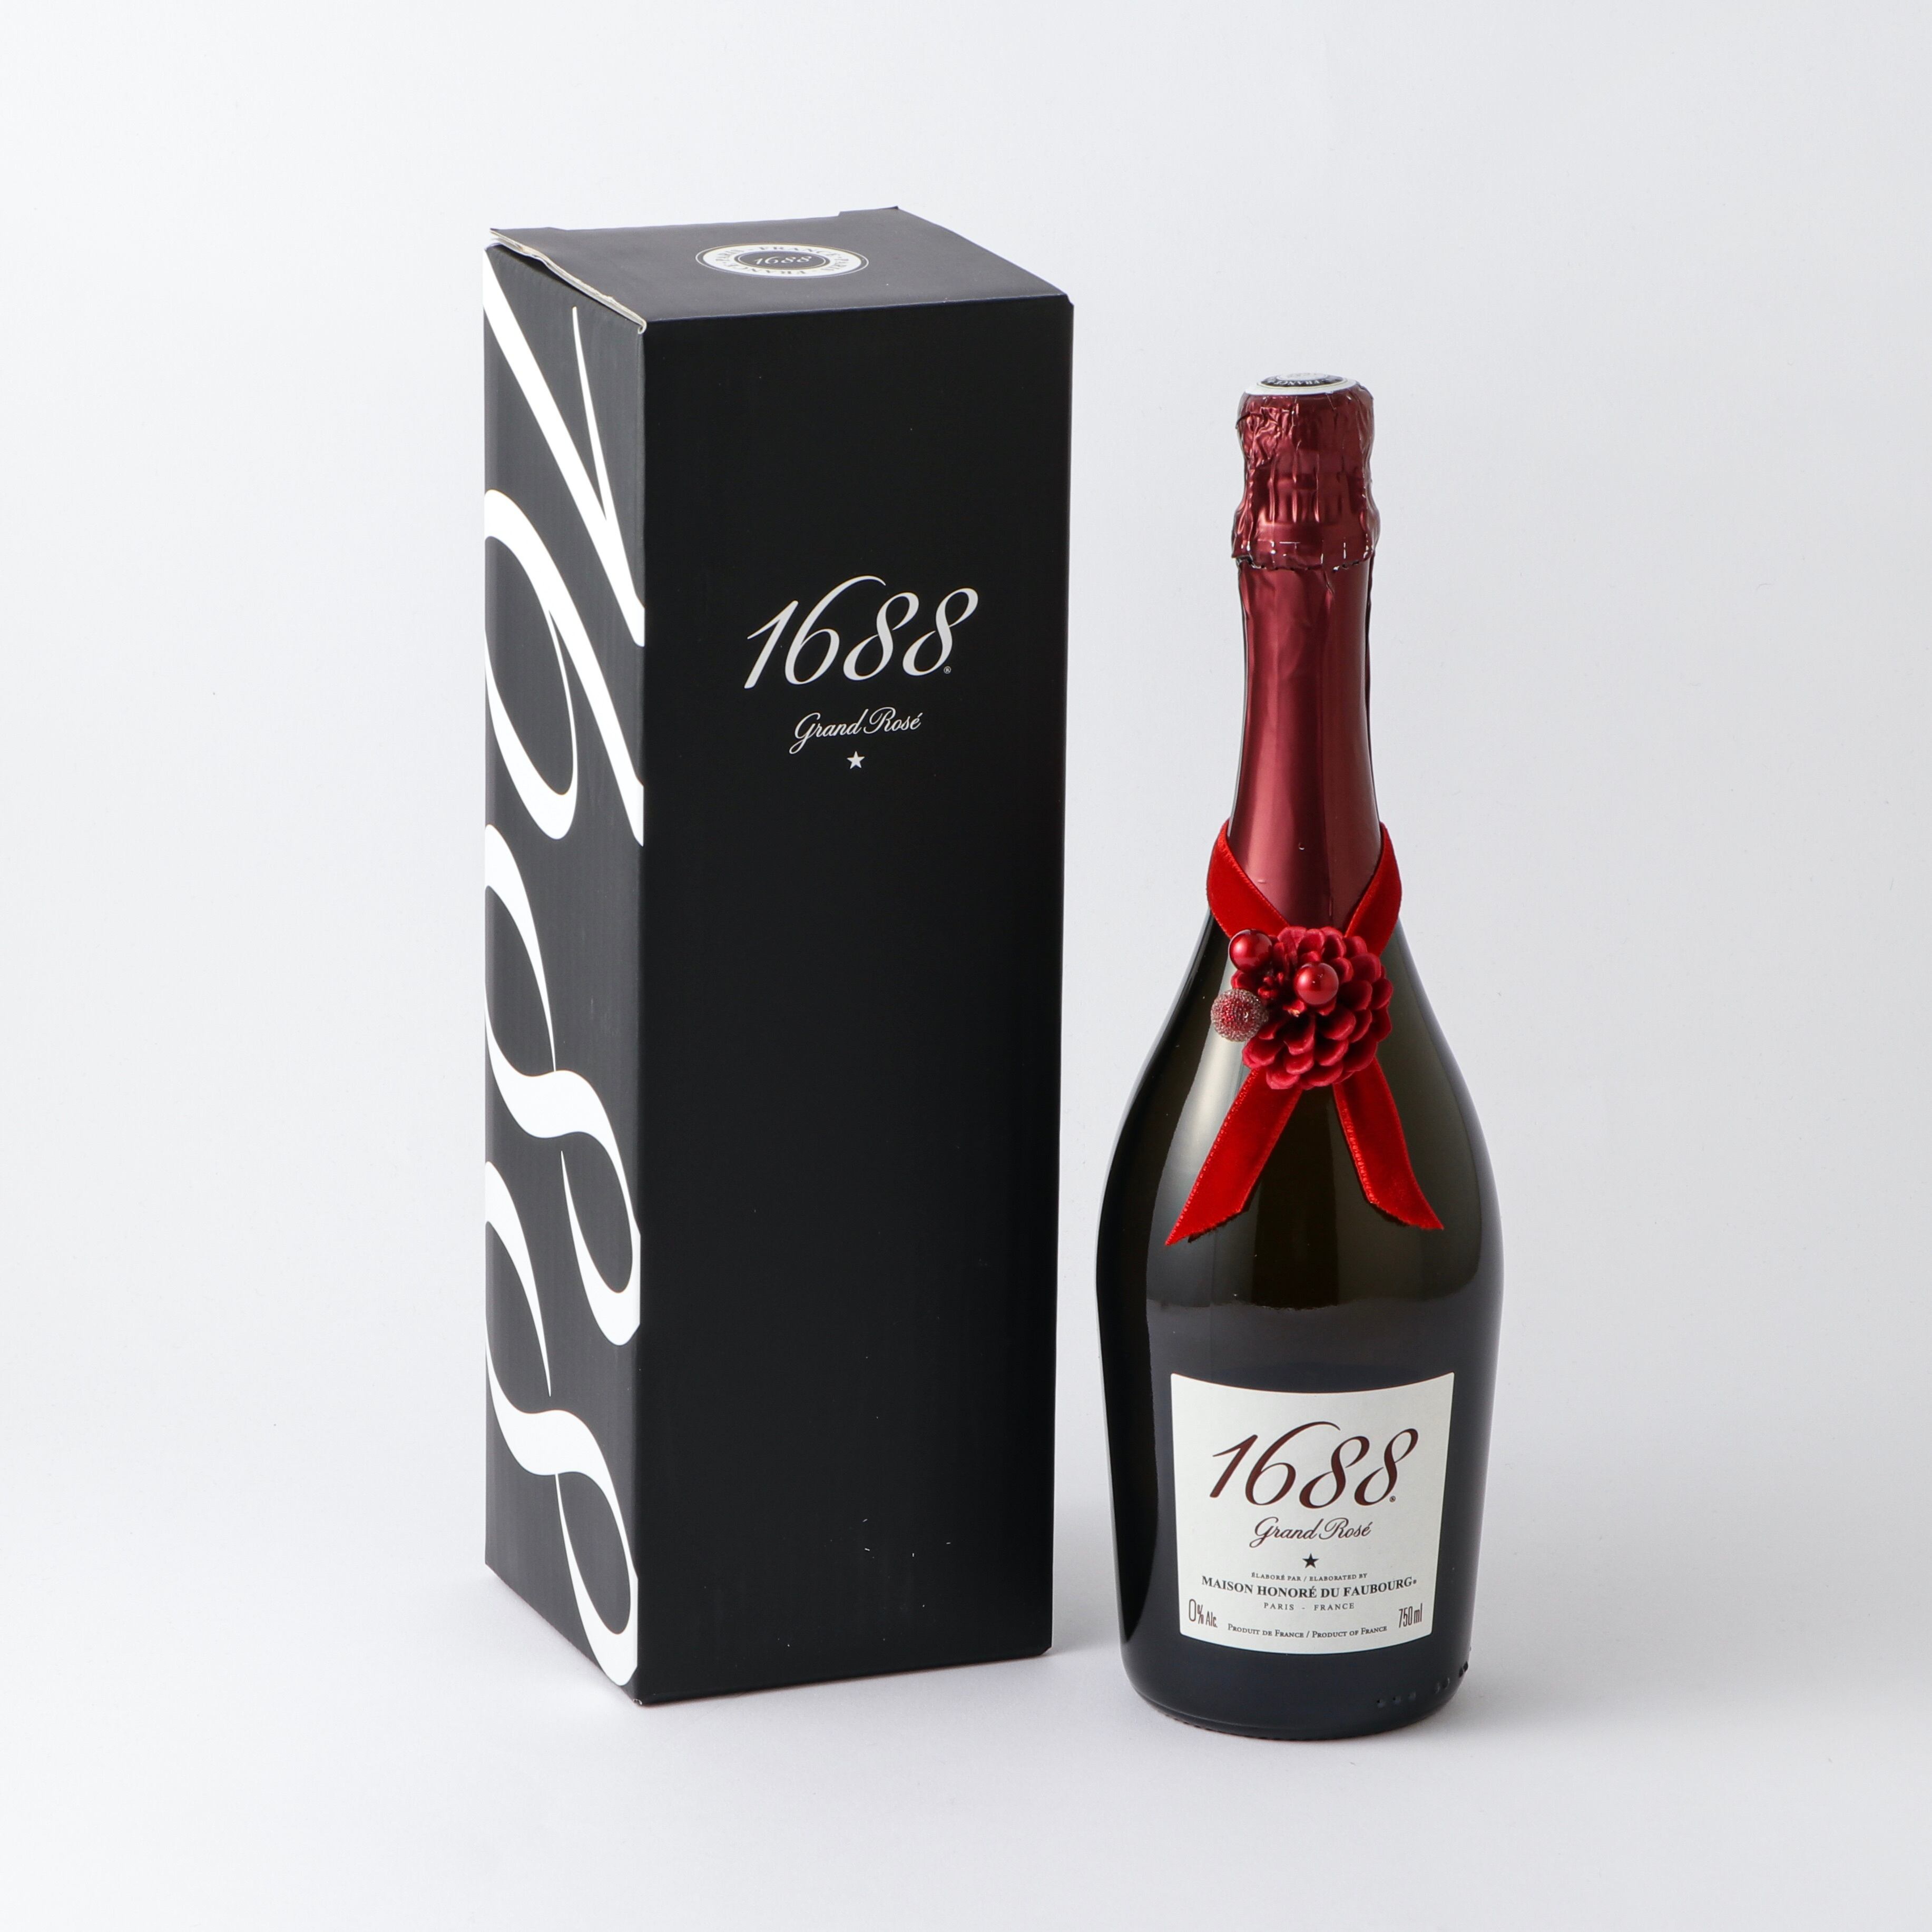 1688 Grand Rosé ペンダントリースセット 【ノンアル】（750ml・箱入り） | 1688 Grand Rosé & Blanc  フランス製ノンアルコールスパークリングワイン 公式通販サイト